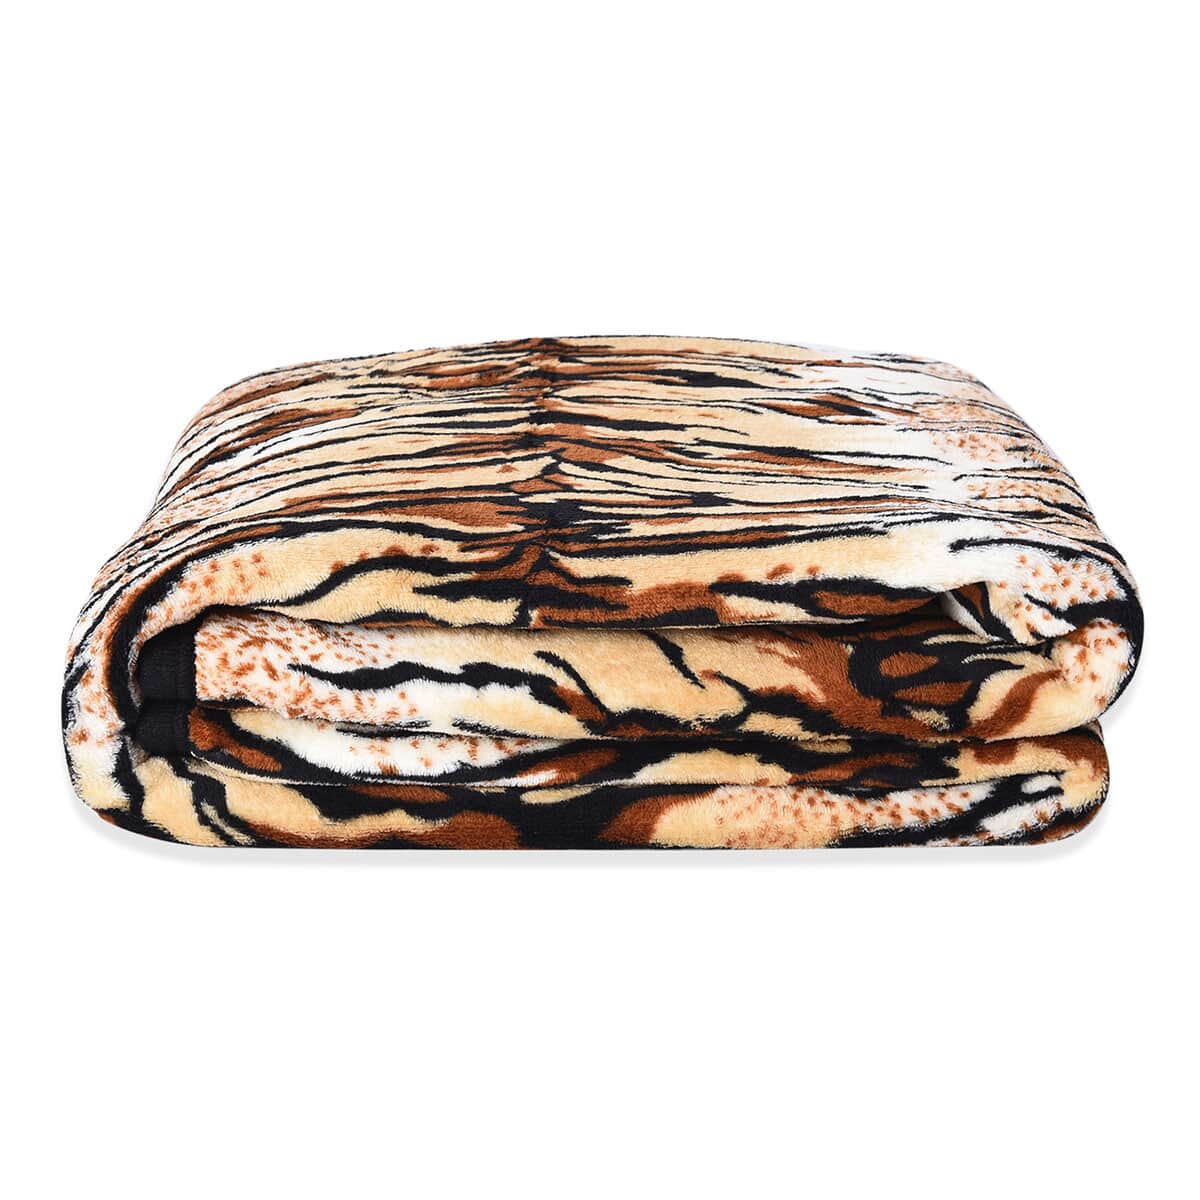 Homesmart Tiger Print Warm & Cozy Coral Fleece Blanket (58x86) image number 0